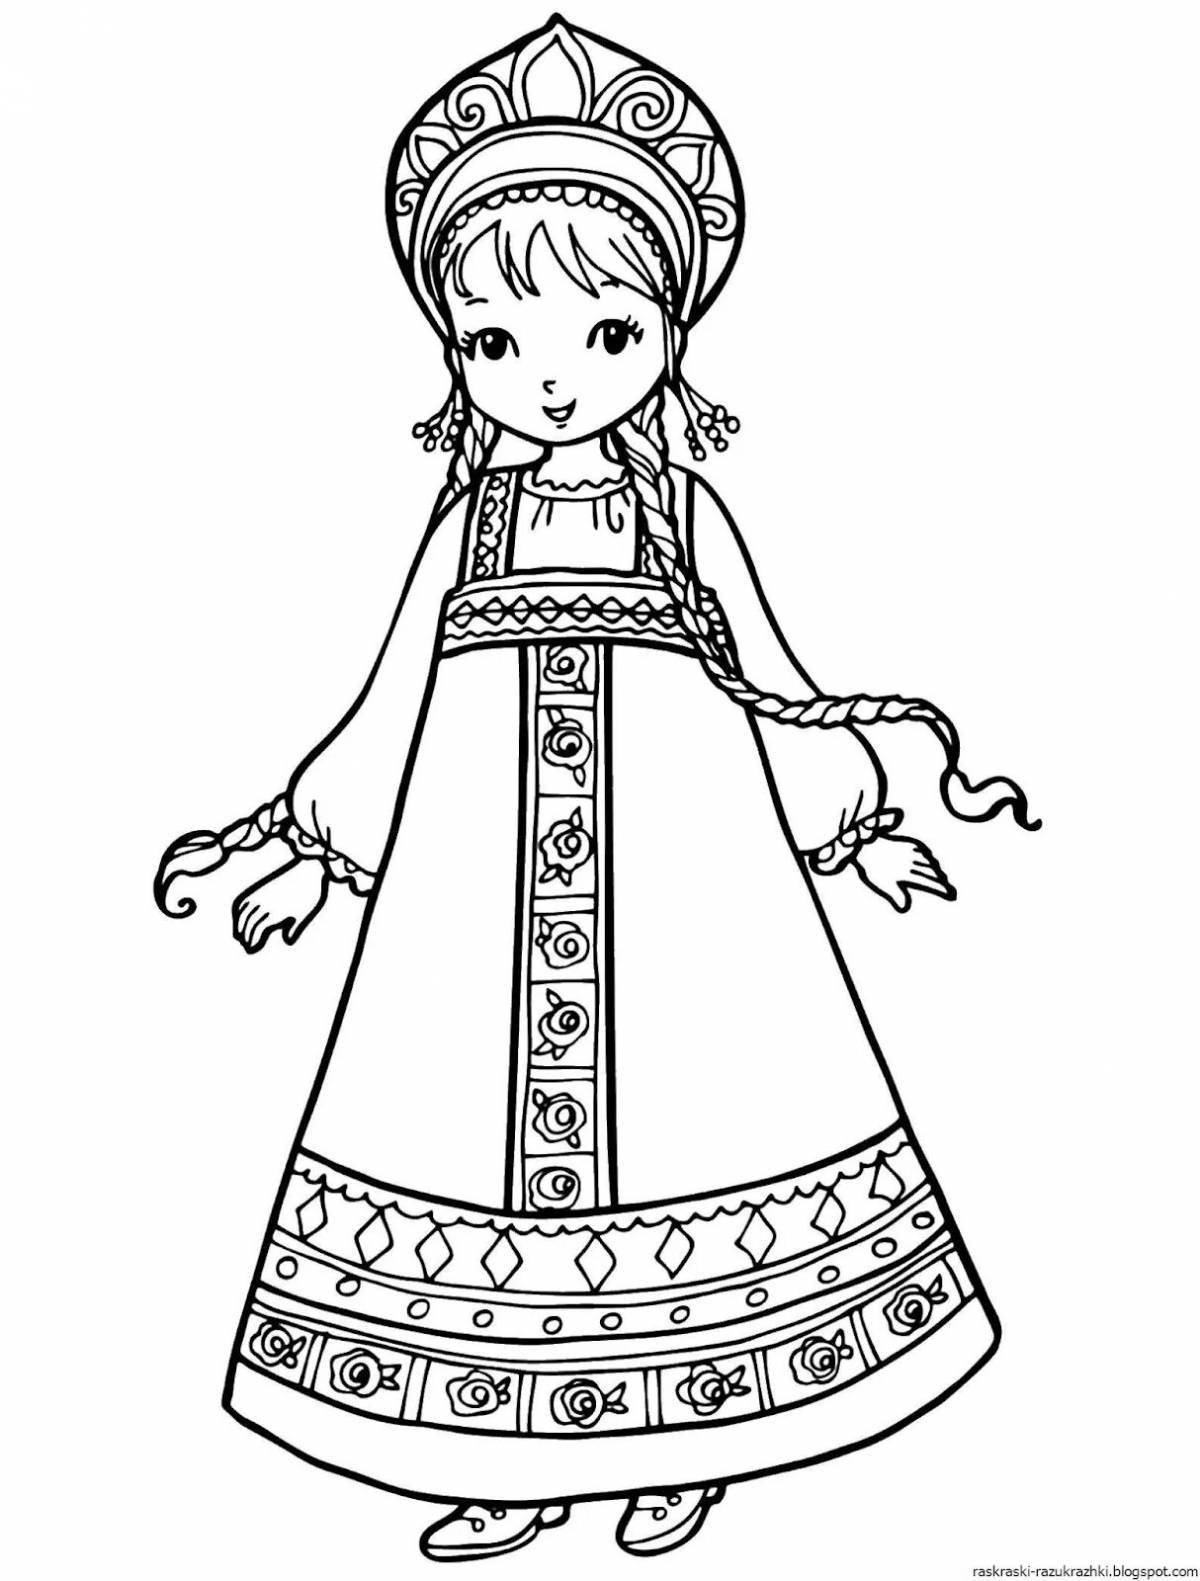 Brilliant coloring girl in Russian folk costume